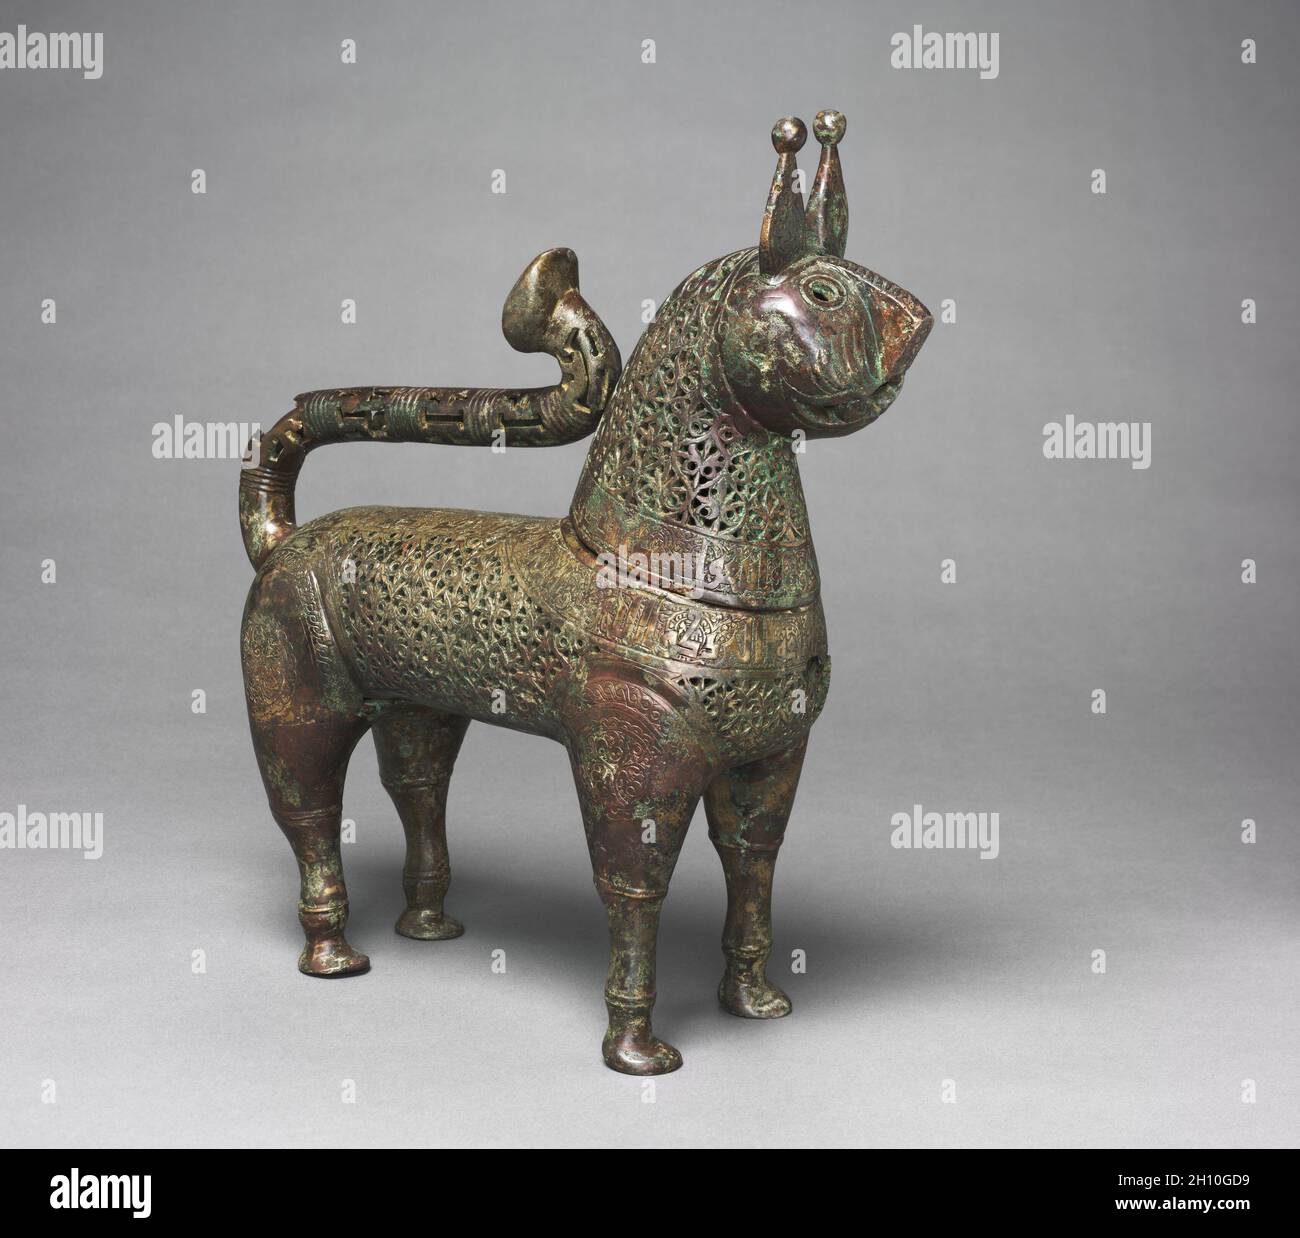 Feline Incense Burner, 1150–1200. Iran, Khurasan, Seljuq period of Iran (1037–1194). Copper alloy, cast, engraved, chased, and pierced; overall: 35.5 x 11 x 32.5 cm (14 x 4 5/16 x 12 13/16 in.); head: 17.8 x 9.5 x 12.5 cm (7 x 3 3/4 x 4 15/16 in.). Stock Photo